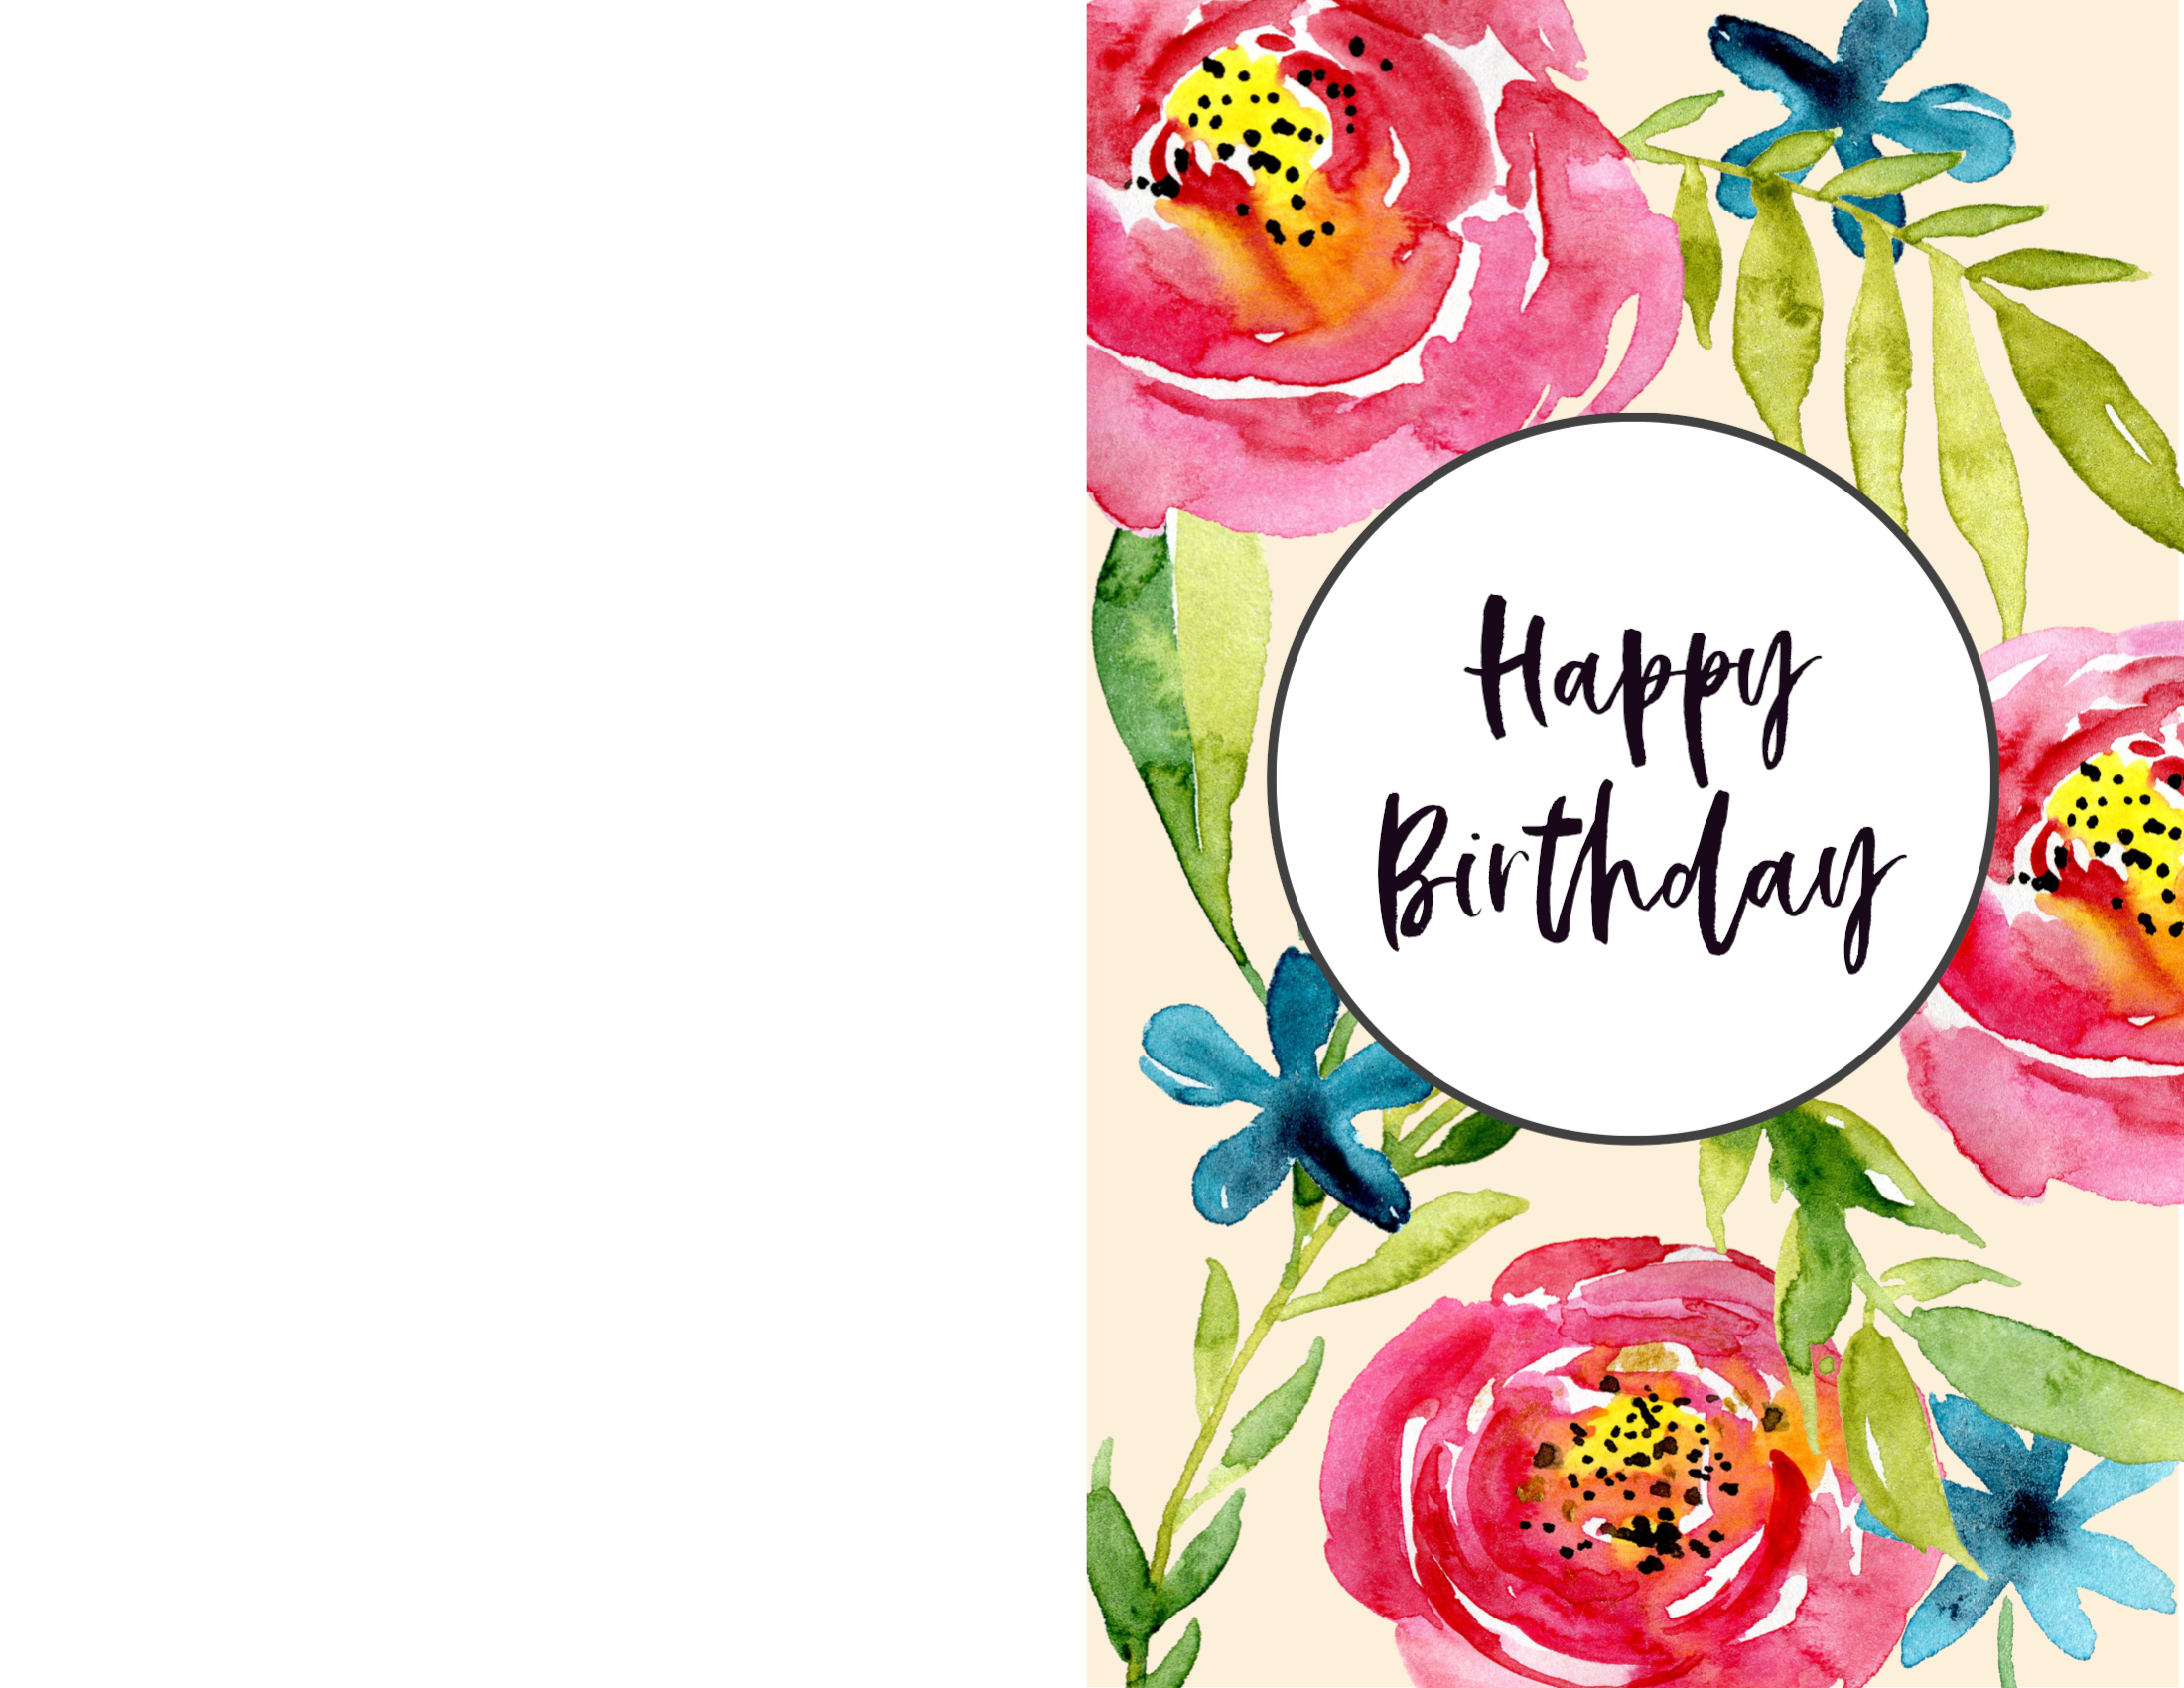 printable-birthday-cards-for-husband-free-printable-birthday-cards